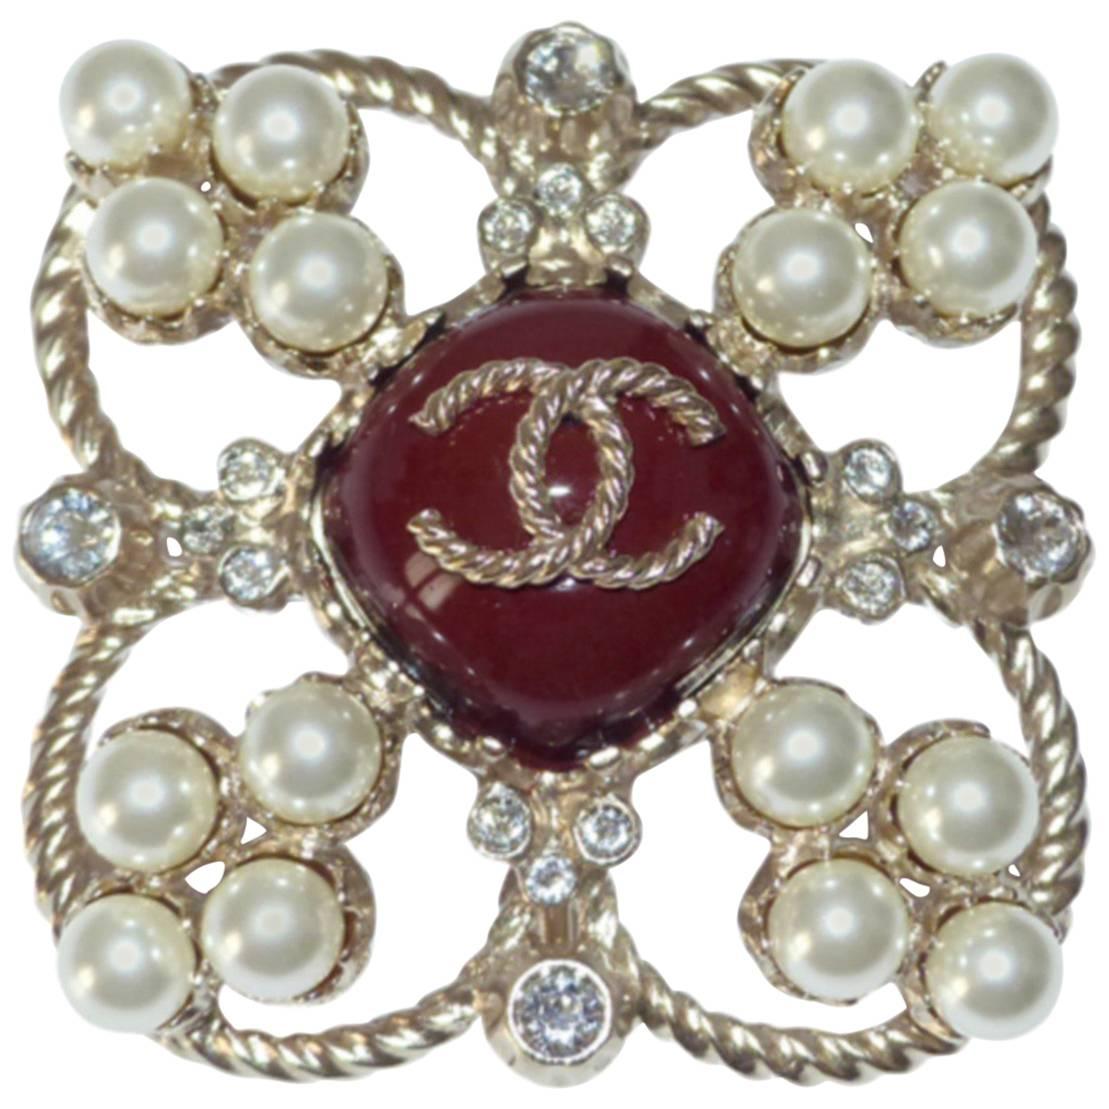 MA-GNI-FIC Chanel Brooch Paris Edimbourg Pearls and CC logo